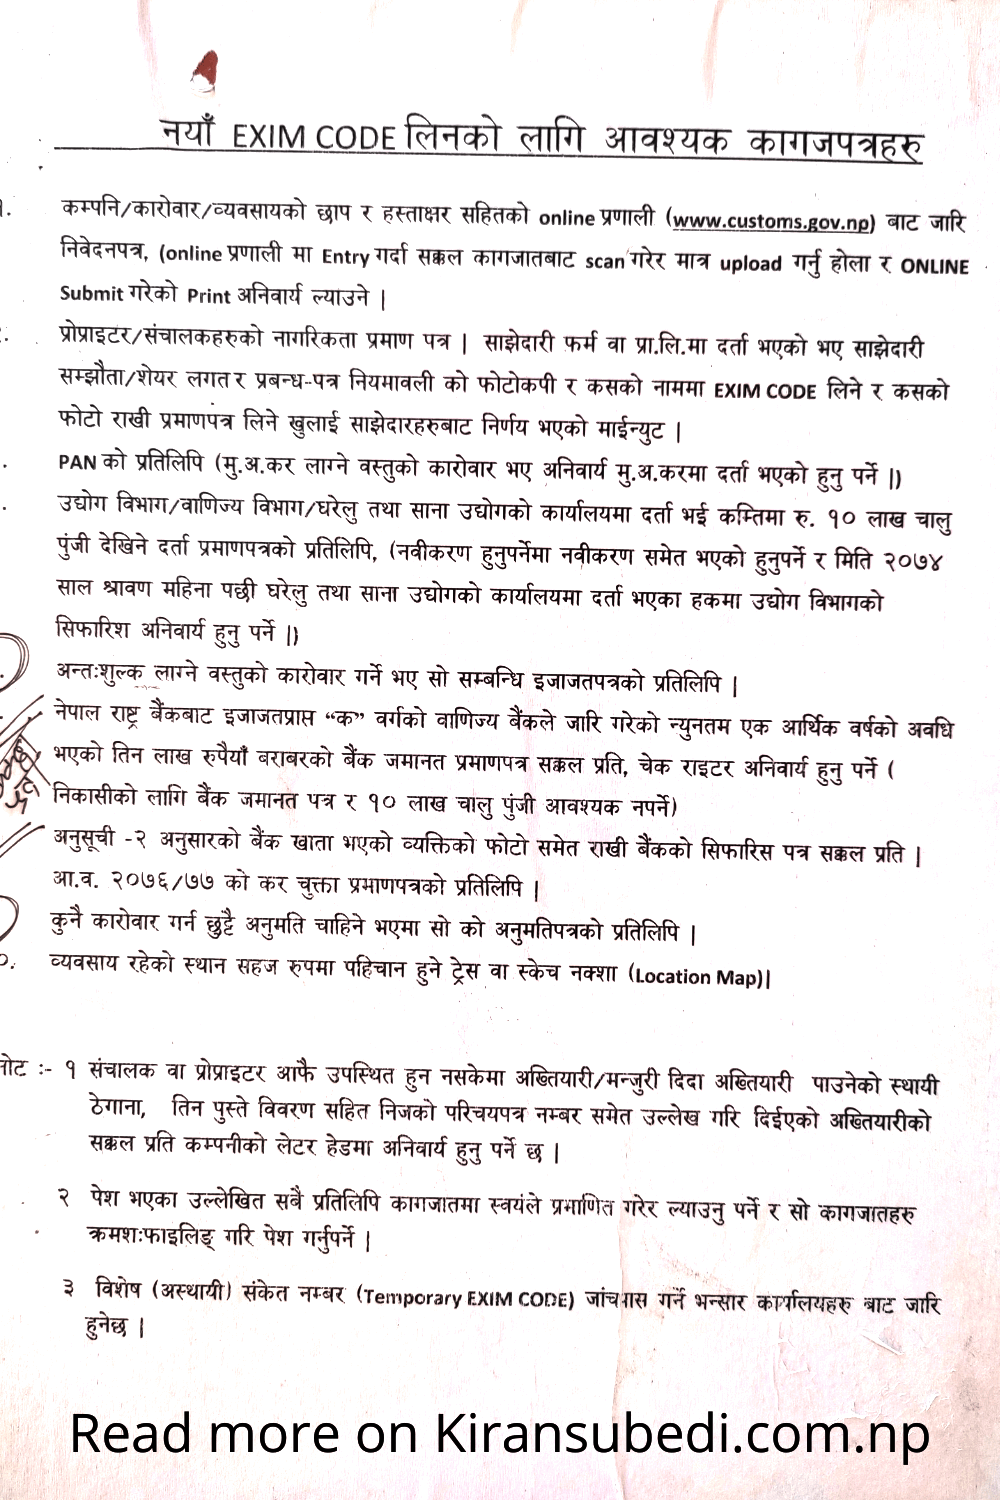 EXIM CODE PROCESS IN NEPAL